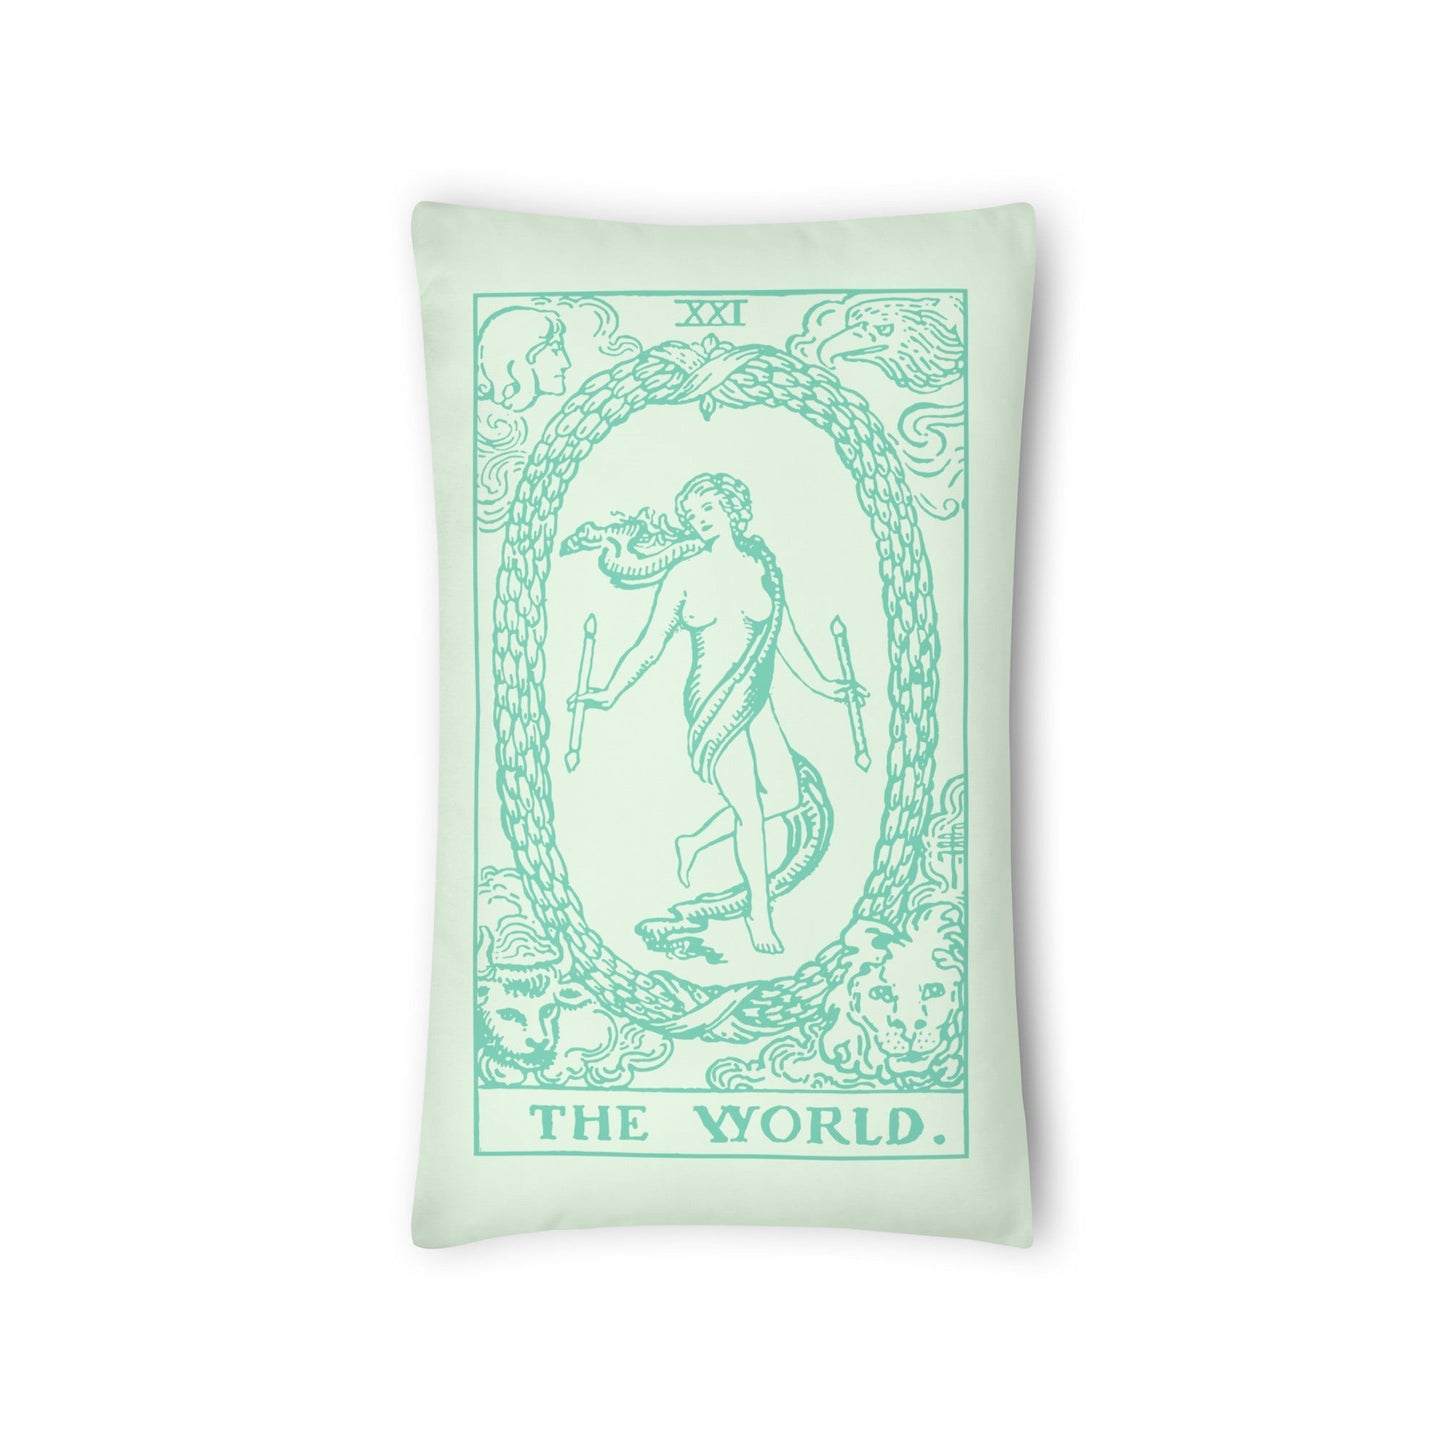 The World Card Throw Pillow